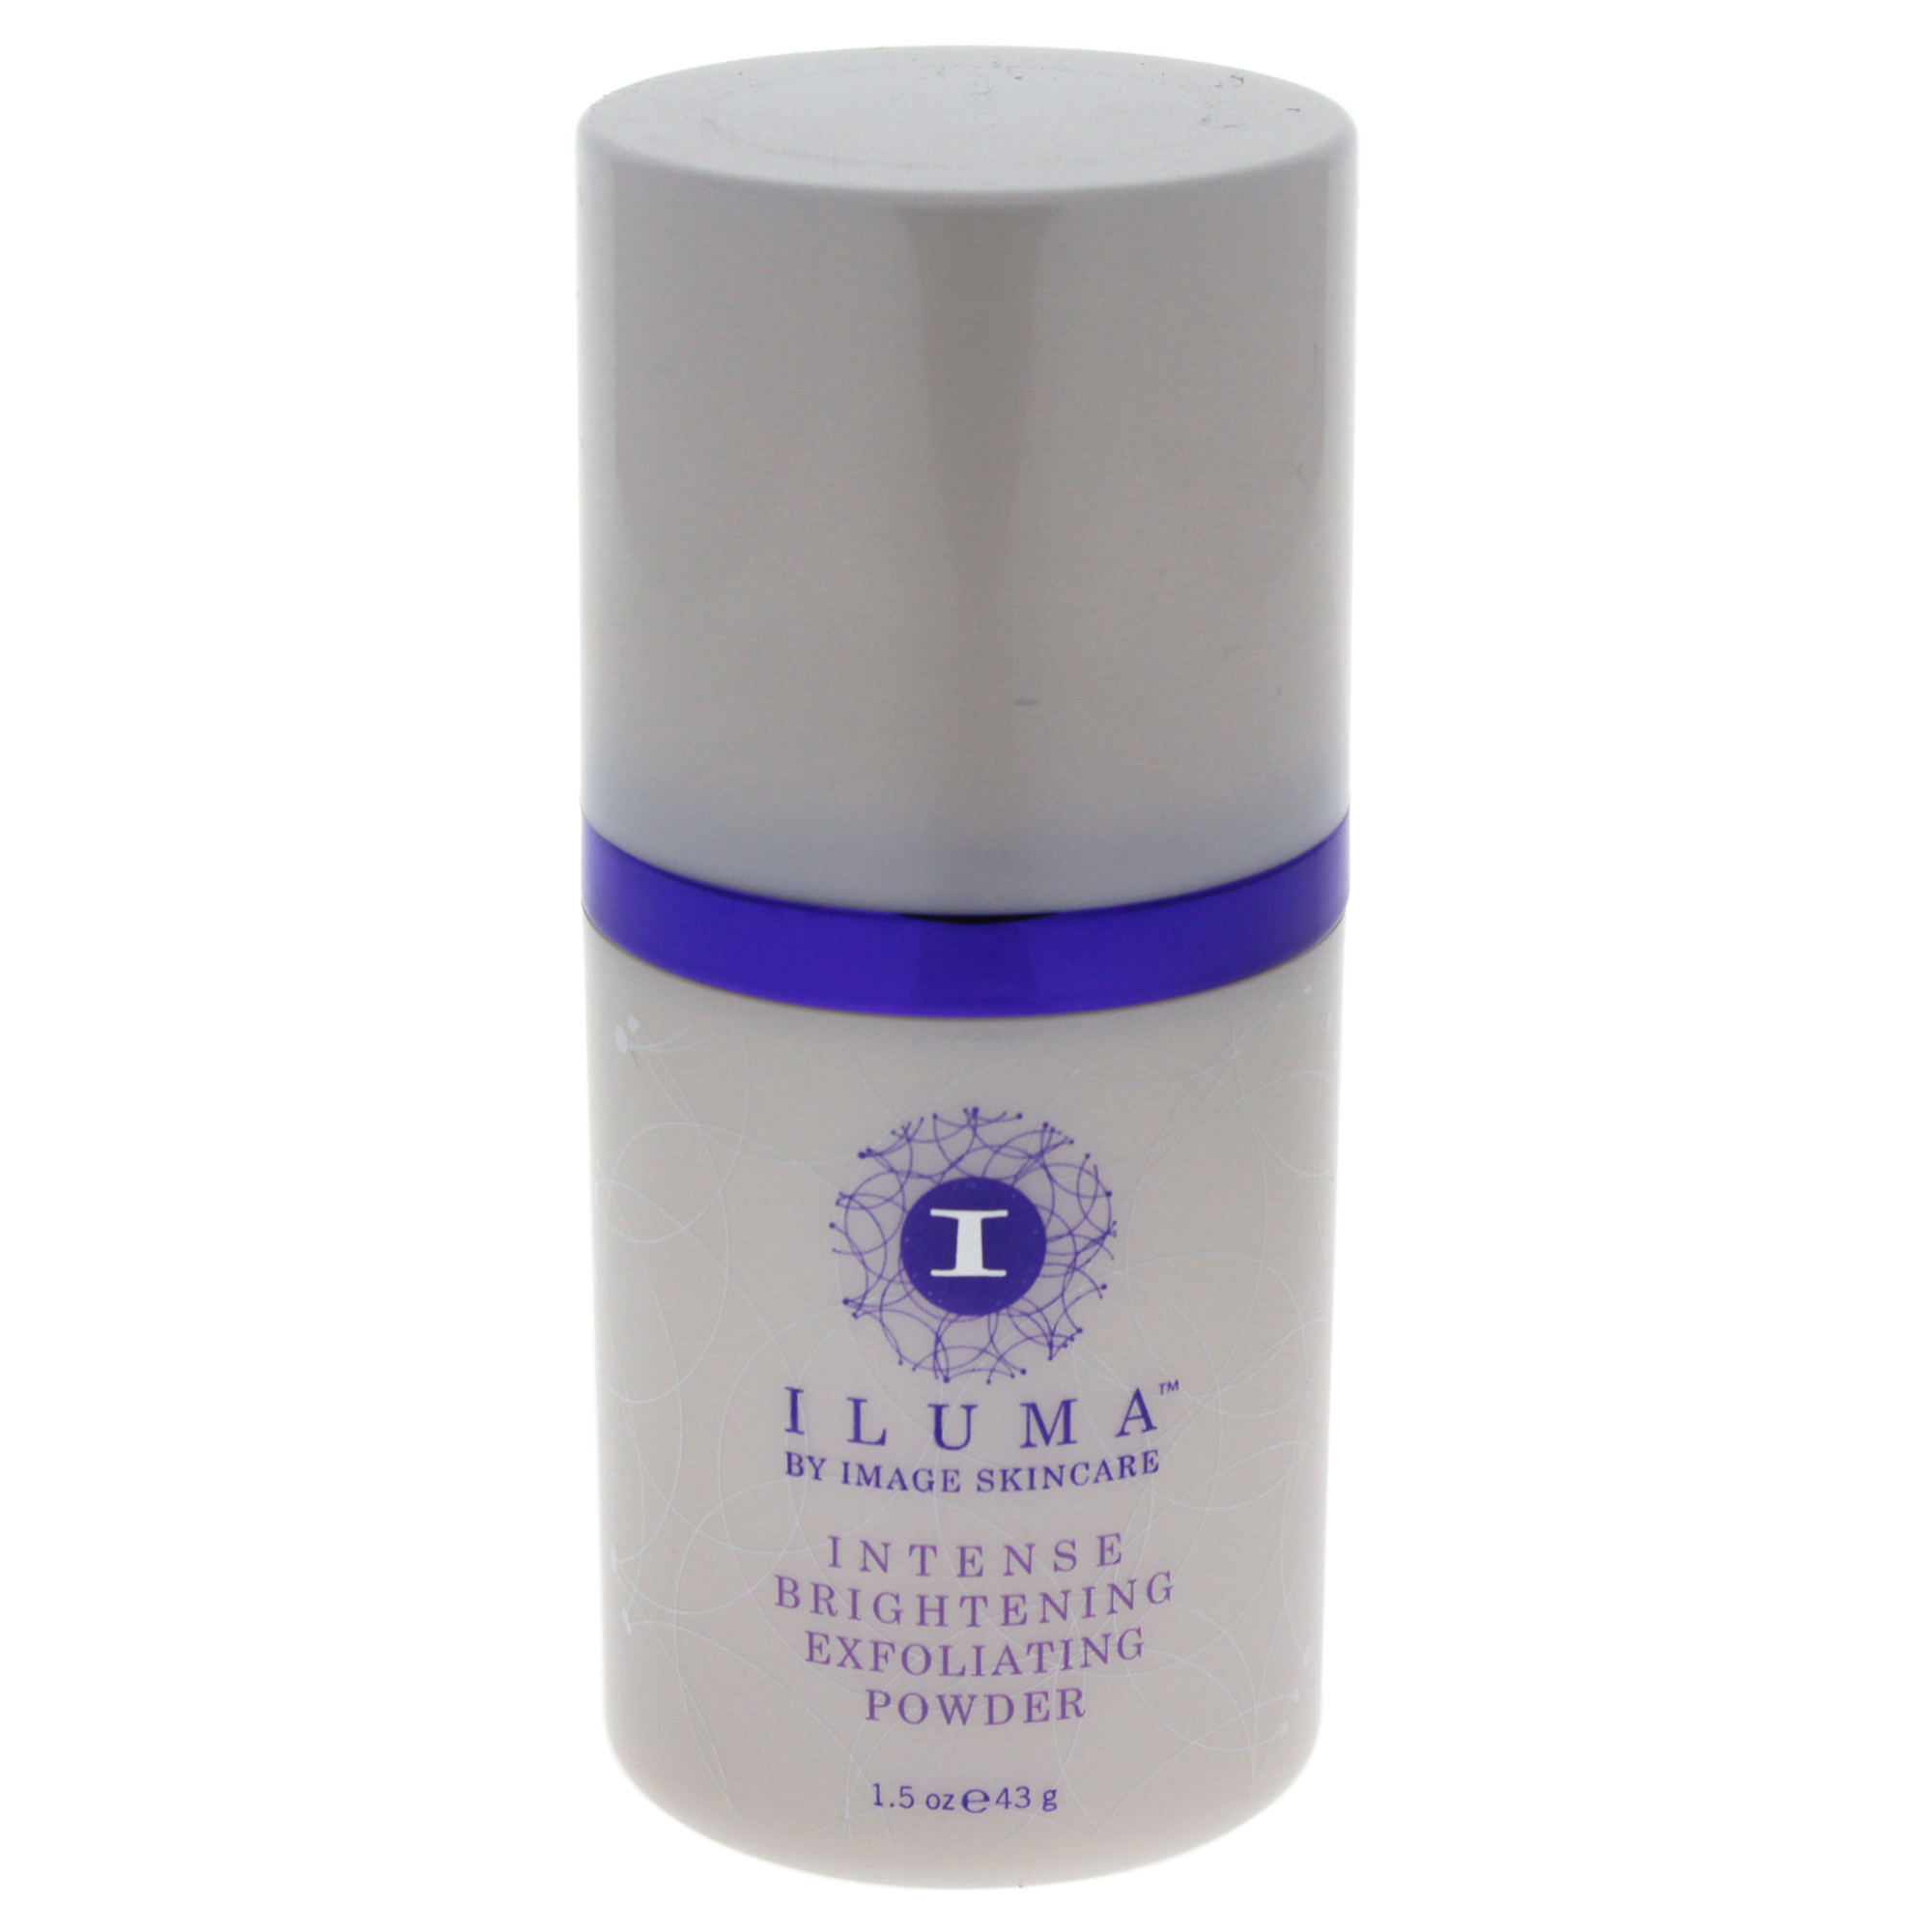 IMAGE Skincare ILUMA Intense Brightening Exfoliating Powder 1.5 oz. - image 2 of 2